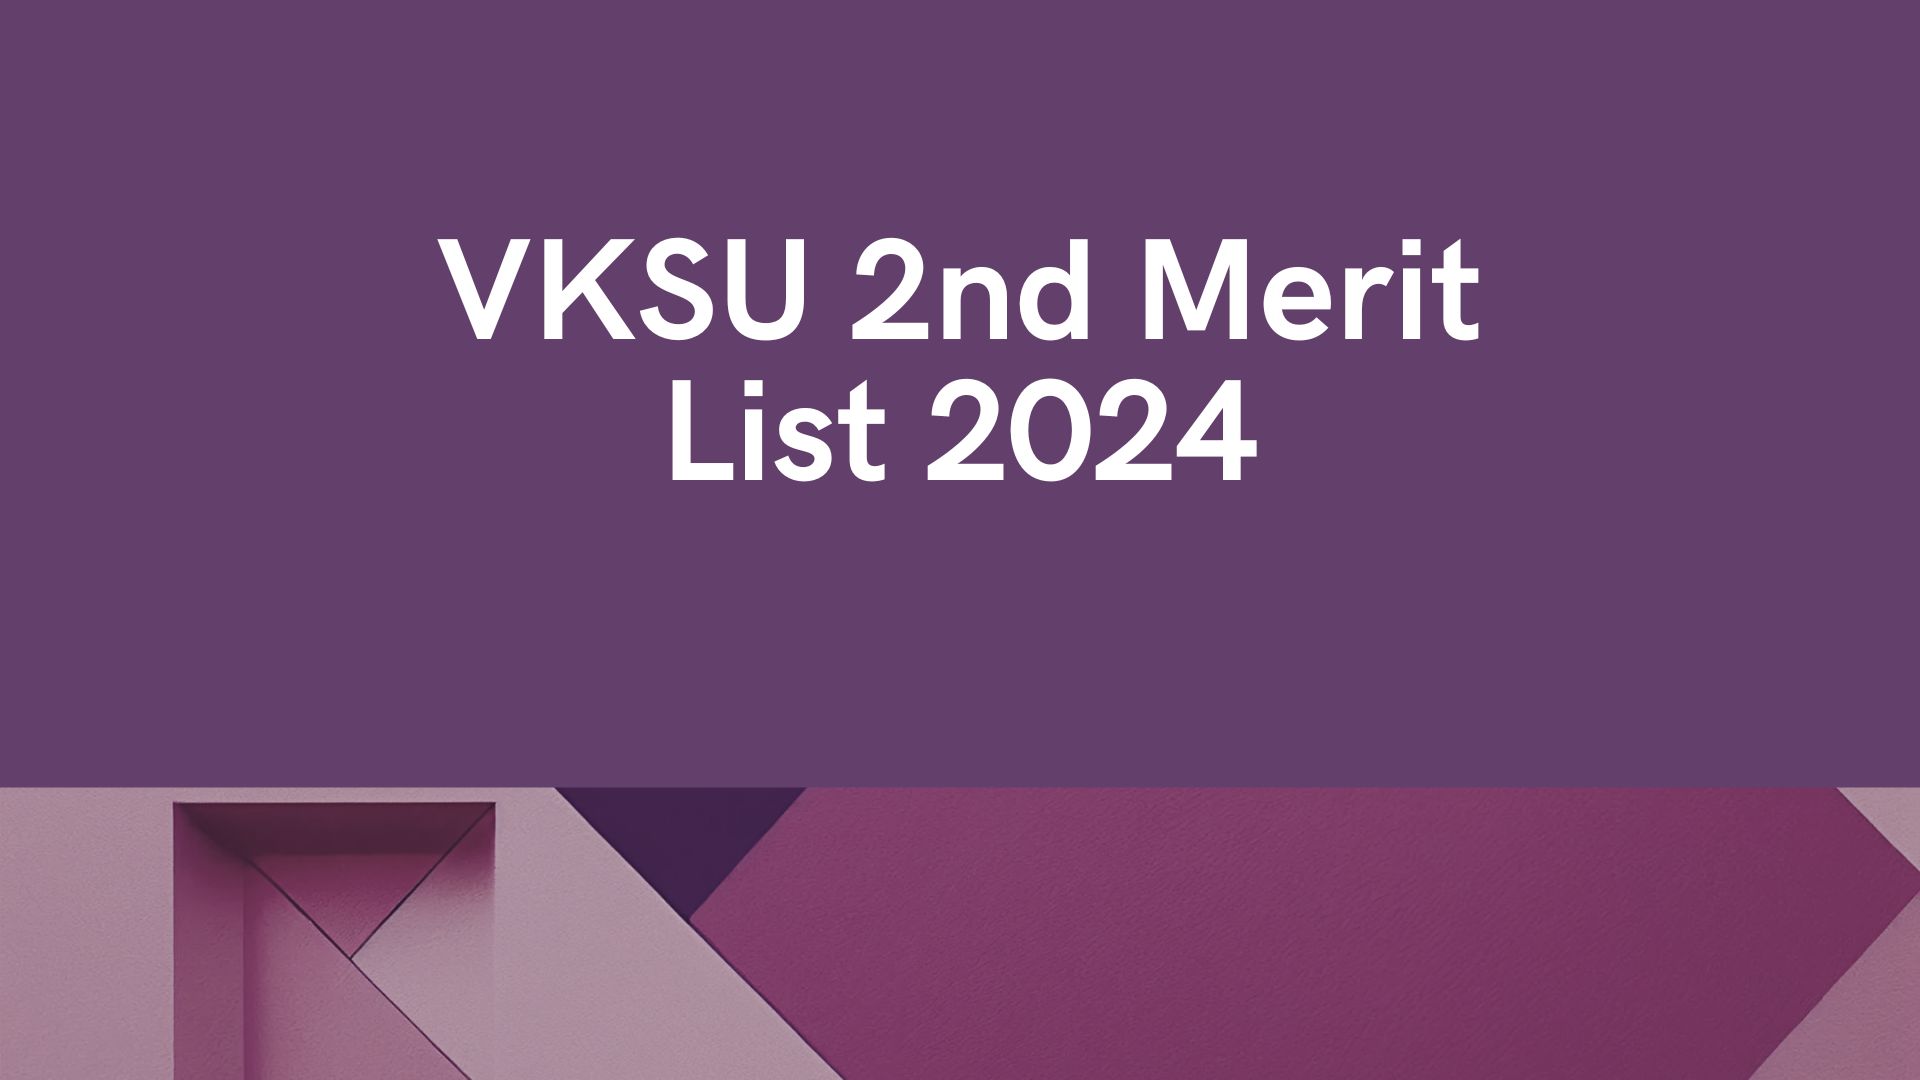 VKSU 2nd Merit List 2024